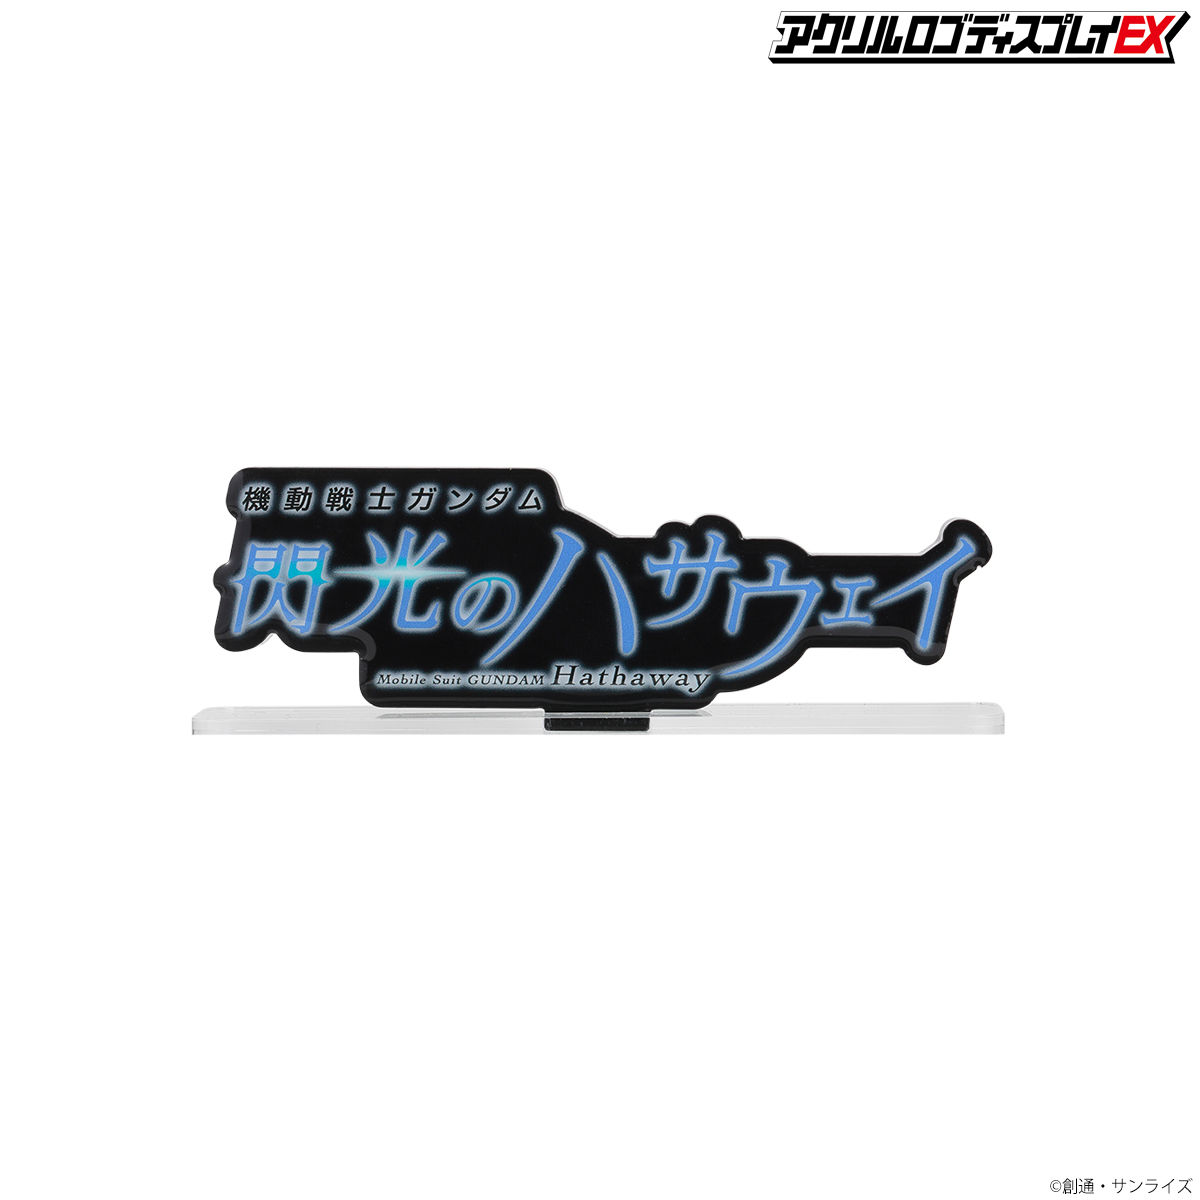 Big Size of Acrylic Logo Display EX Mobile Suit Gundam Hathaway in Black Background